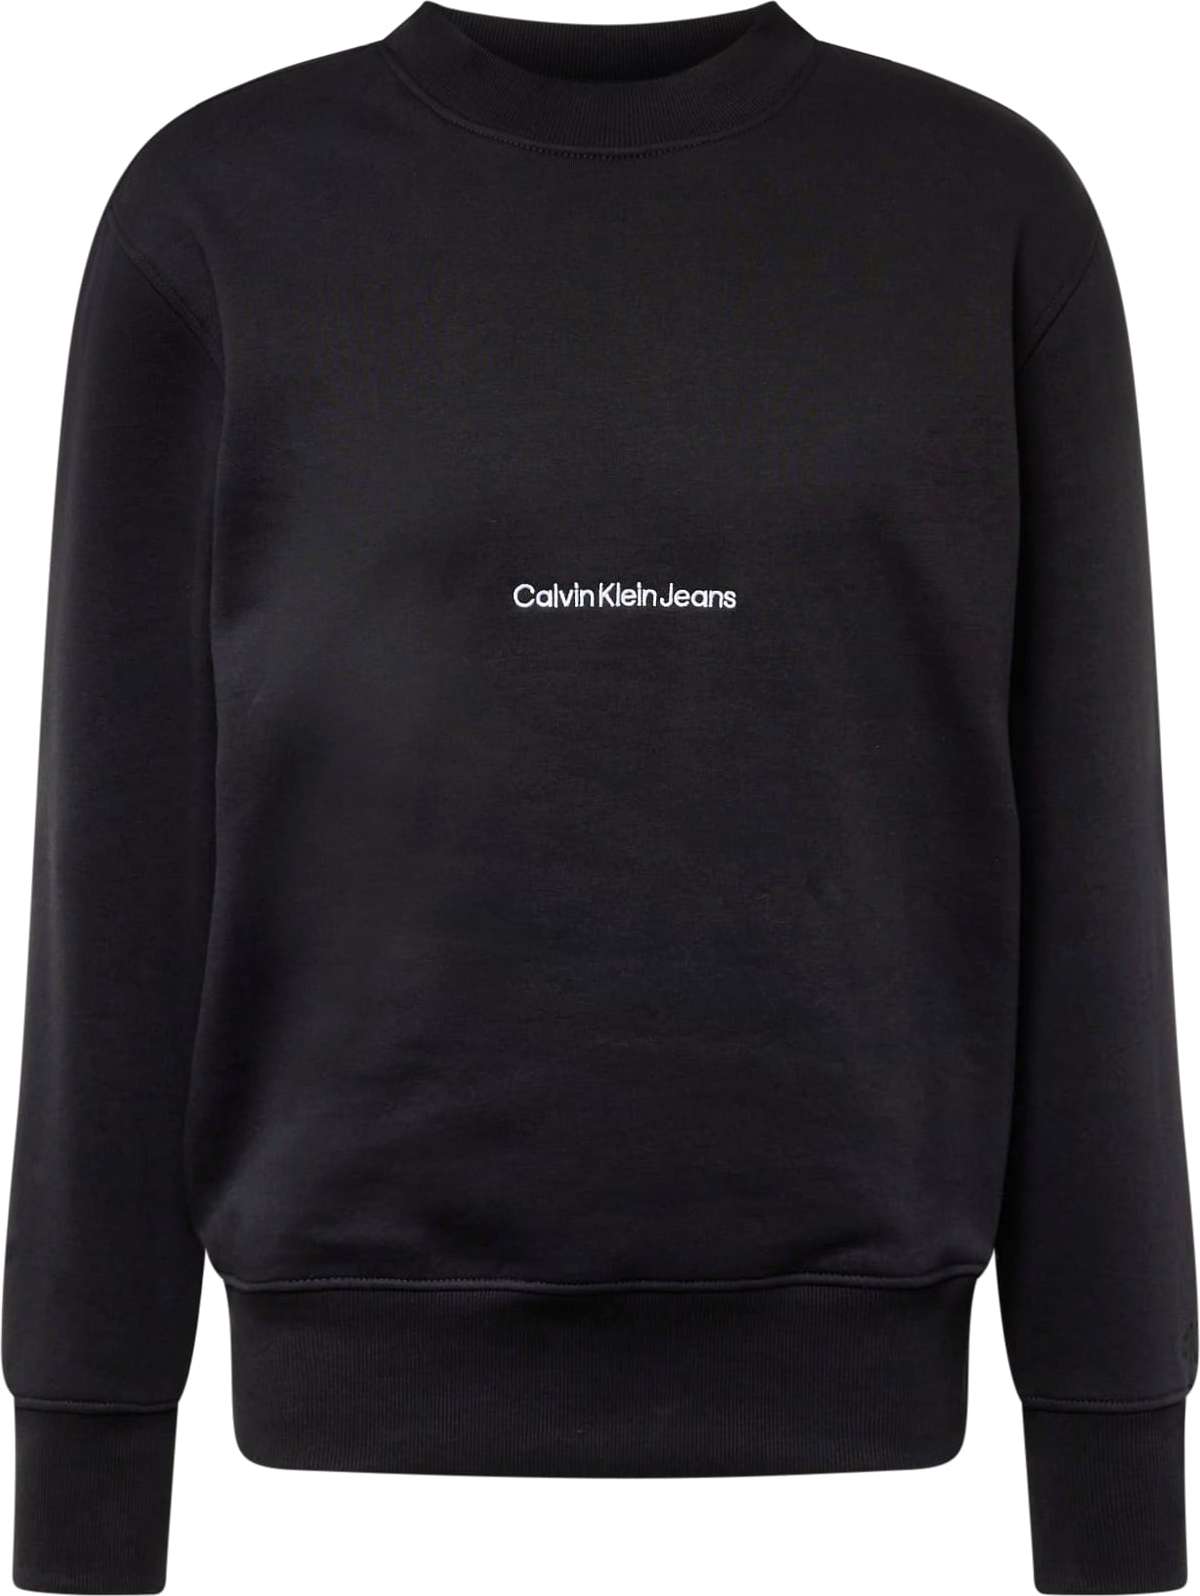 Mikina 'Institutional' Calvin Klein Jeans černá / bílá